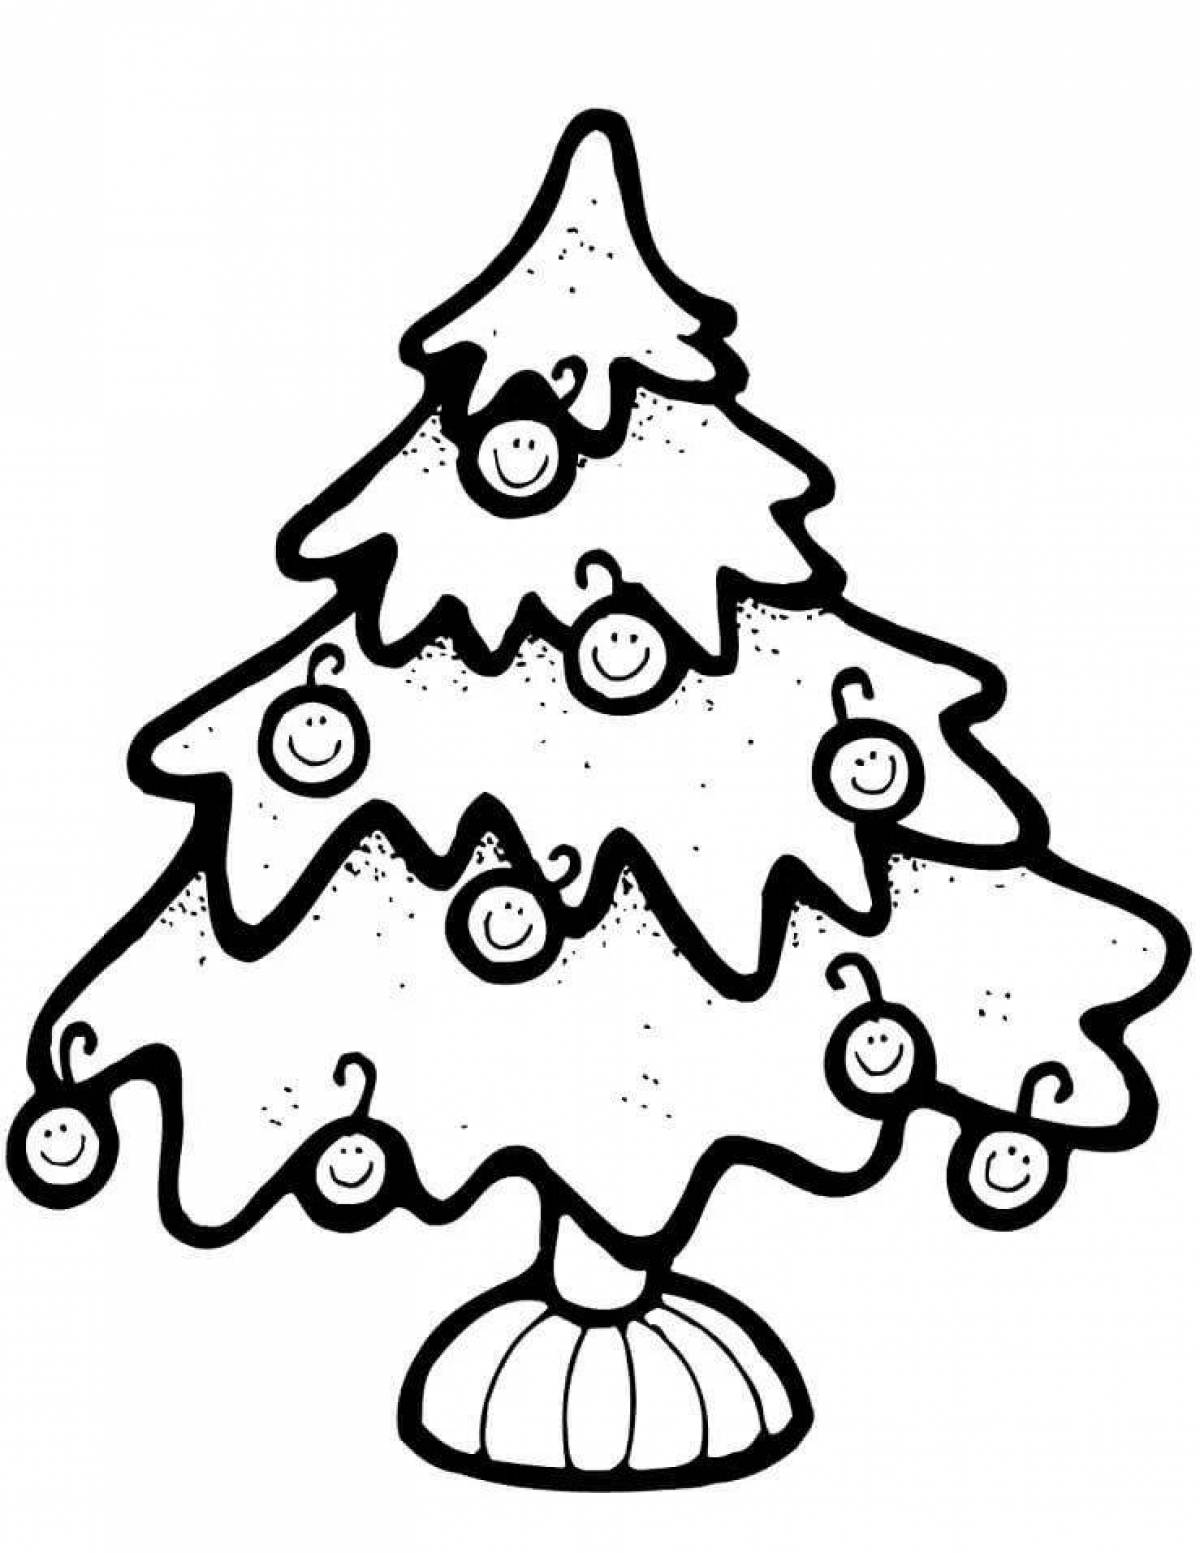 Shiny Christmas tree coloring page